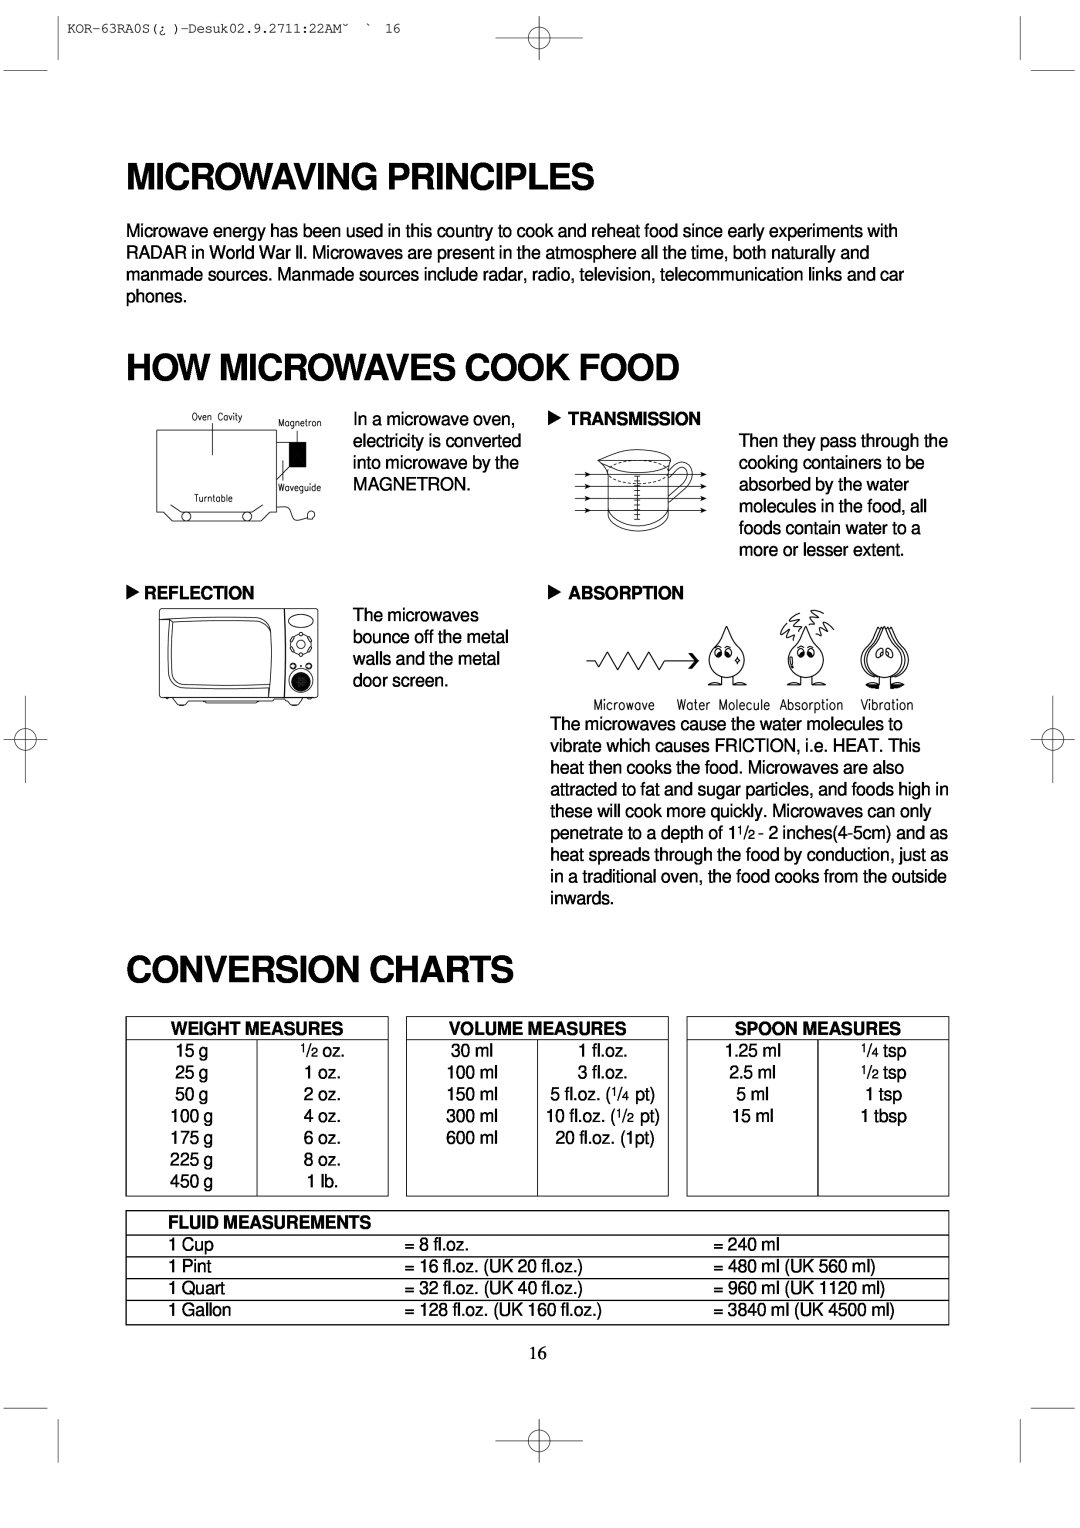 Daewoo KOR-63RA Microwaving Principles, How Microwaves Cook Food, Conversion Charts, Reflection, Transmission Absorption 